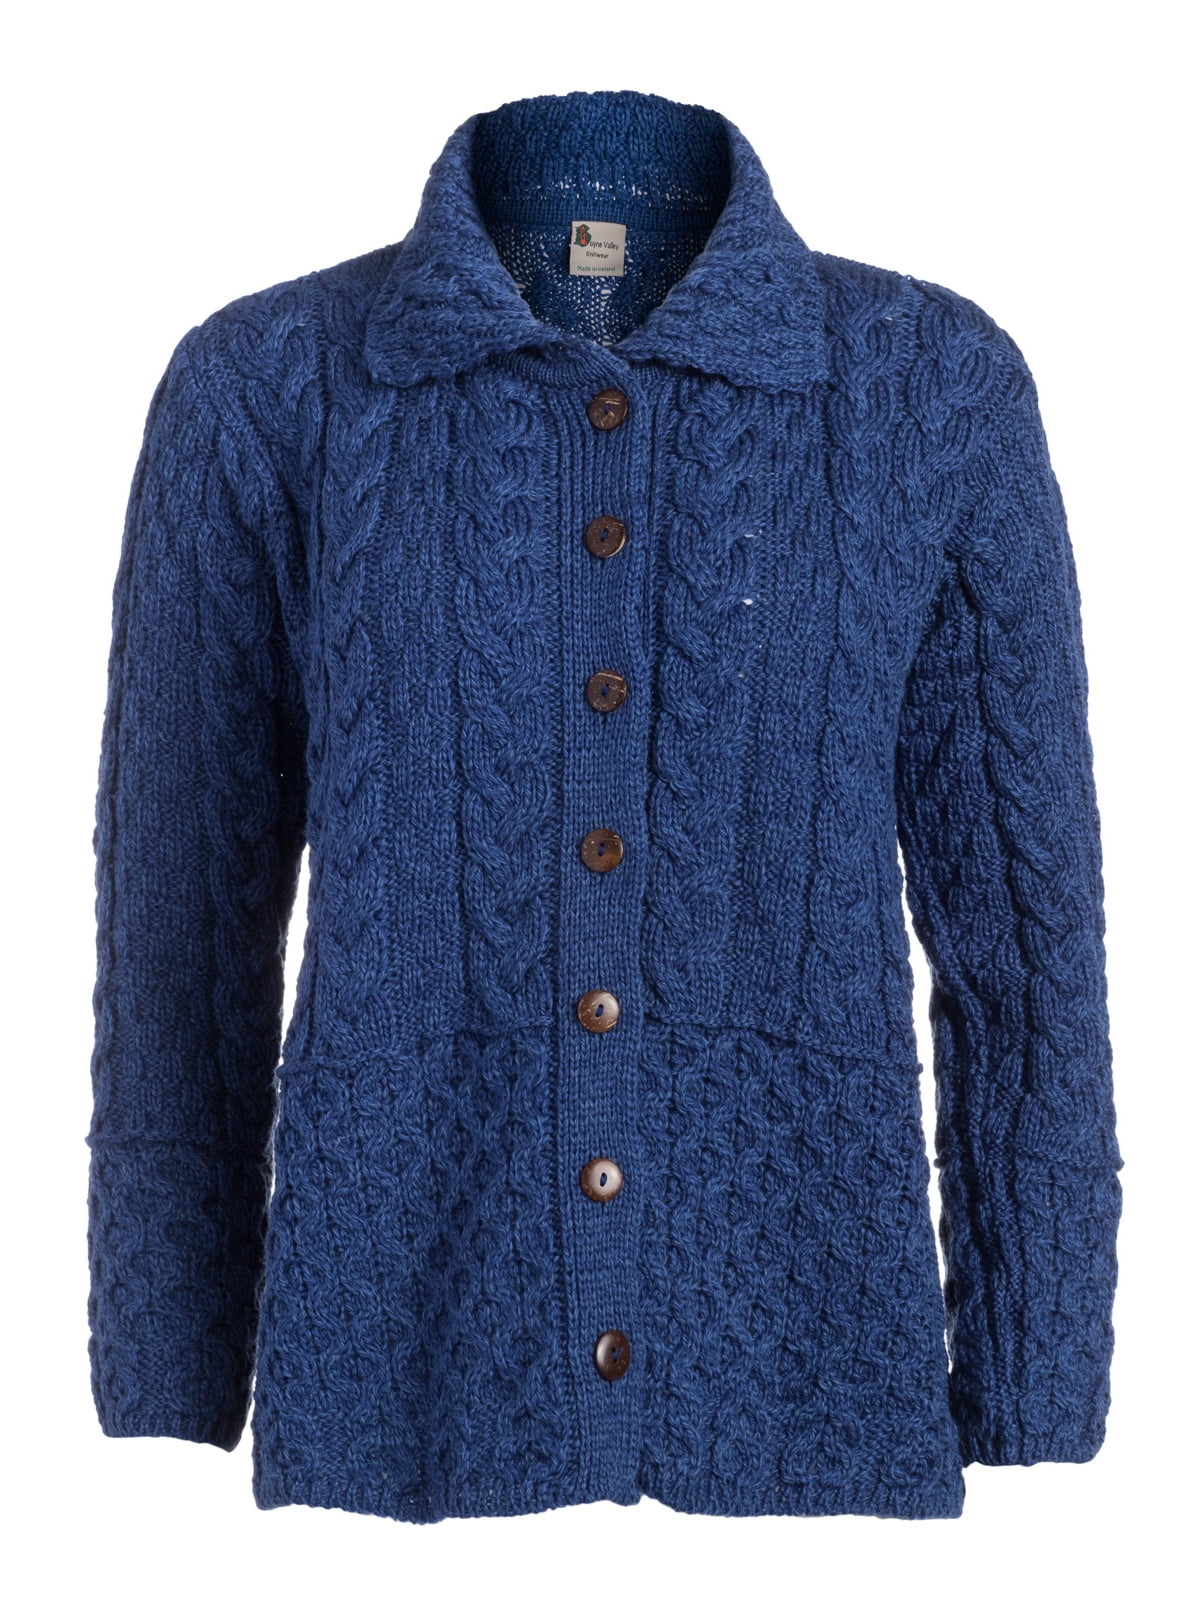 Boyne Valley Knitwear Women's Honeycomb Wool Cardigan Front Buttons ...